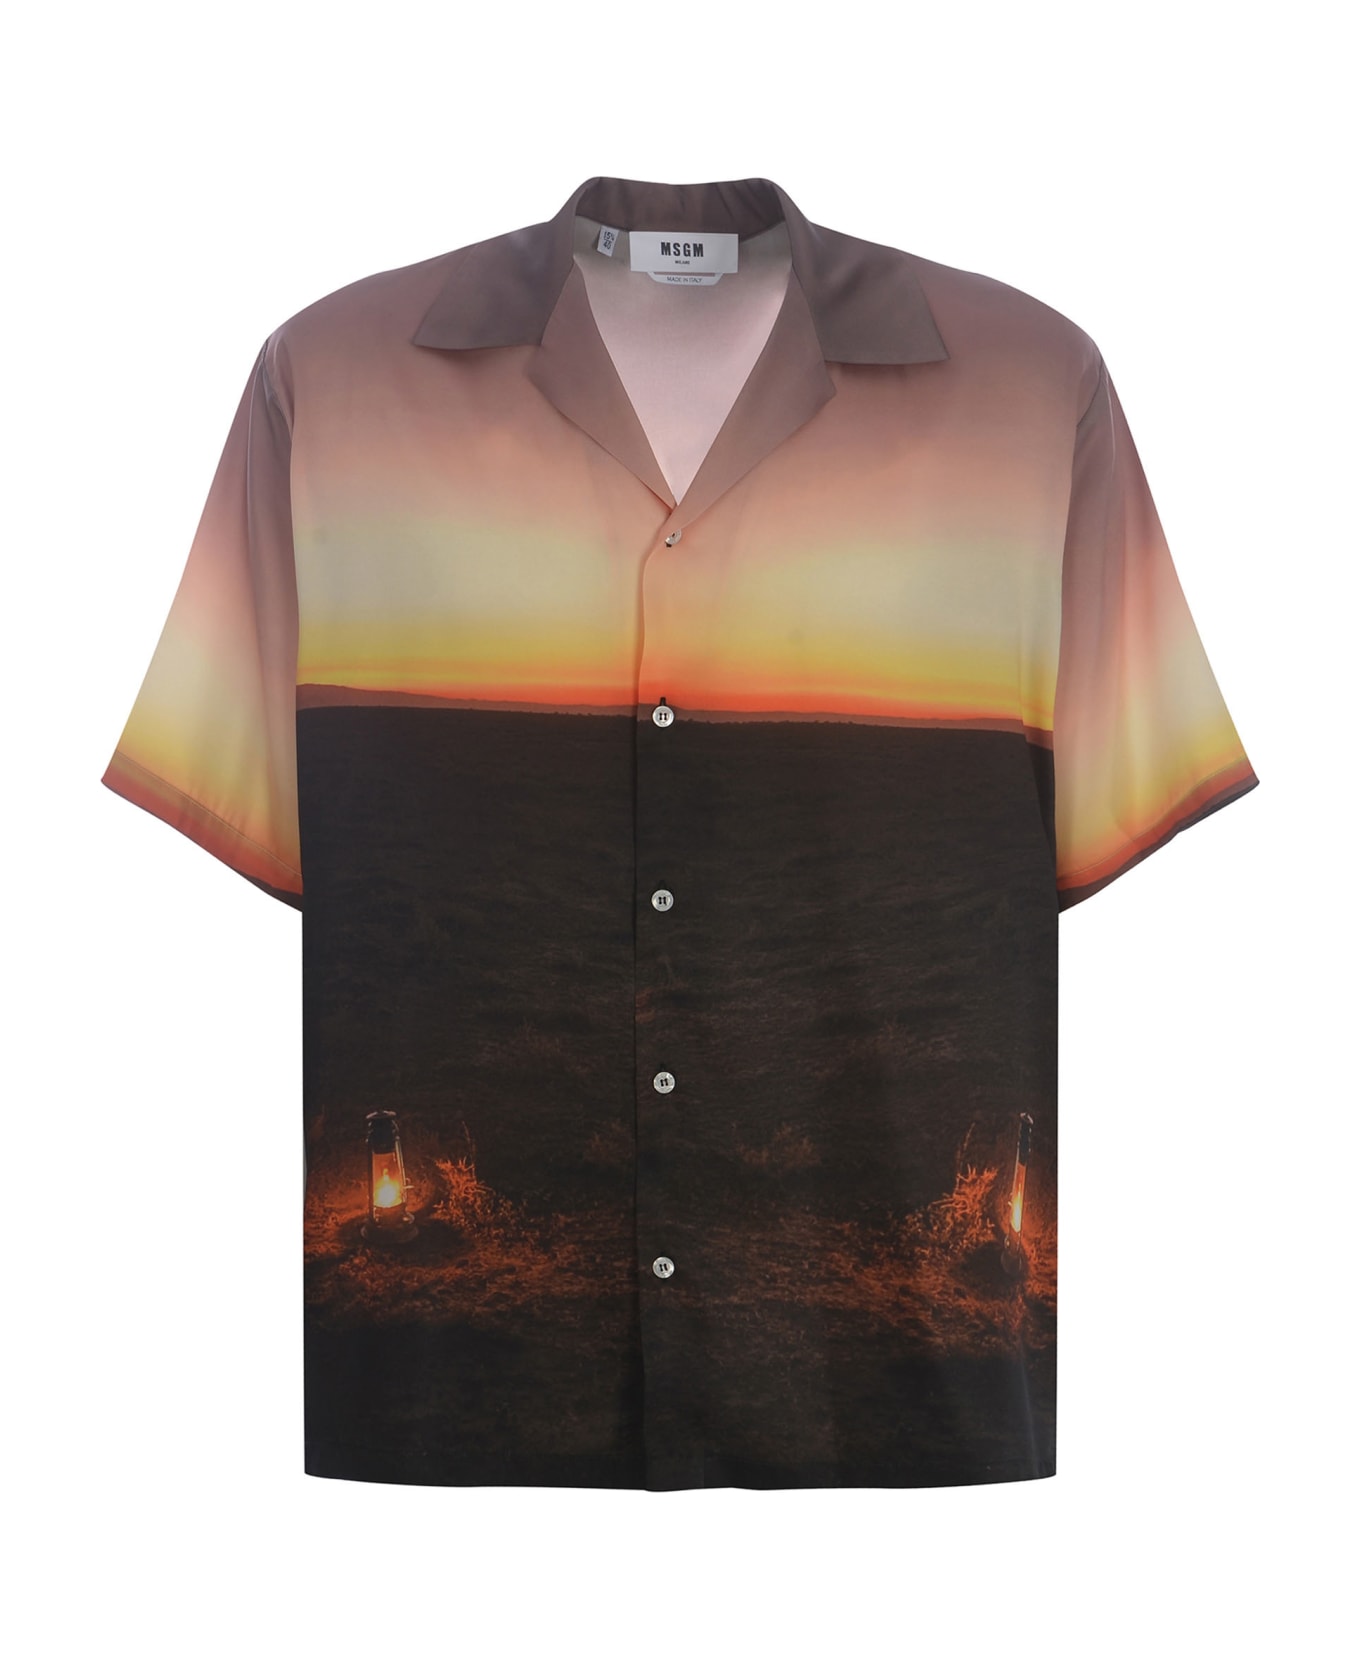 MSGM Shirt Msgm "sunset" Made Of Fluid Fabric - Multicolor シャツ